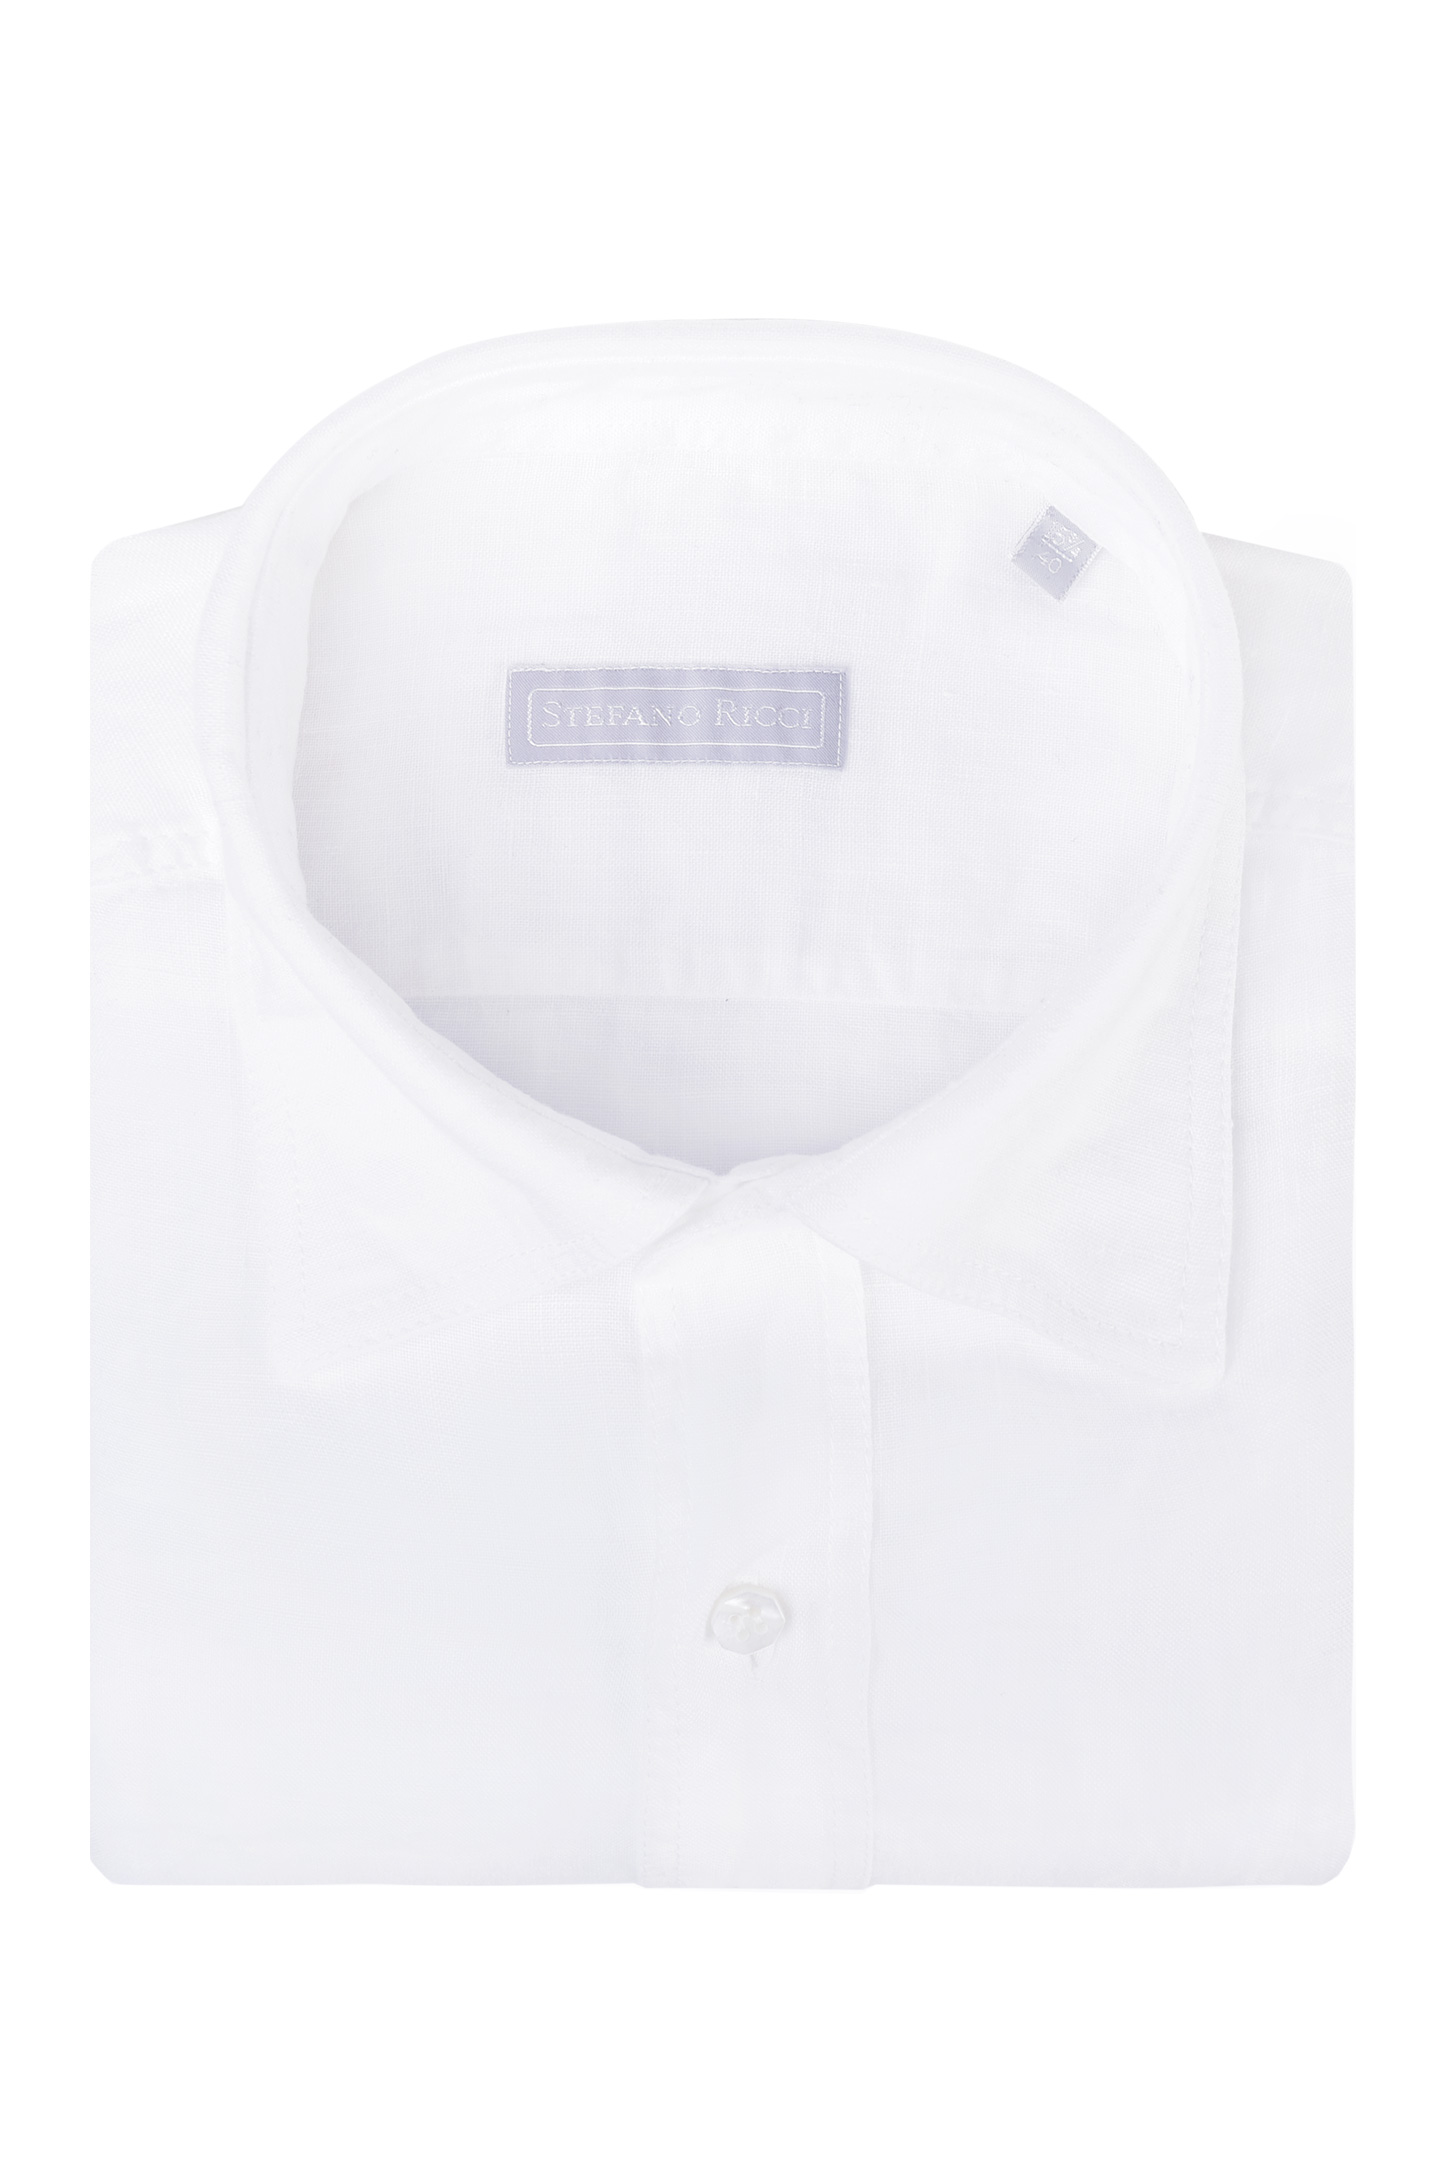 Рубашка STEFANO RICCI MC005949 L1950, цвет: Белый, Мужской